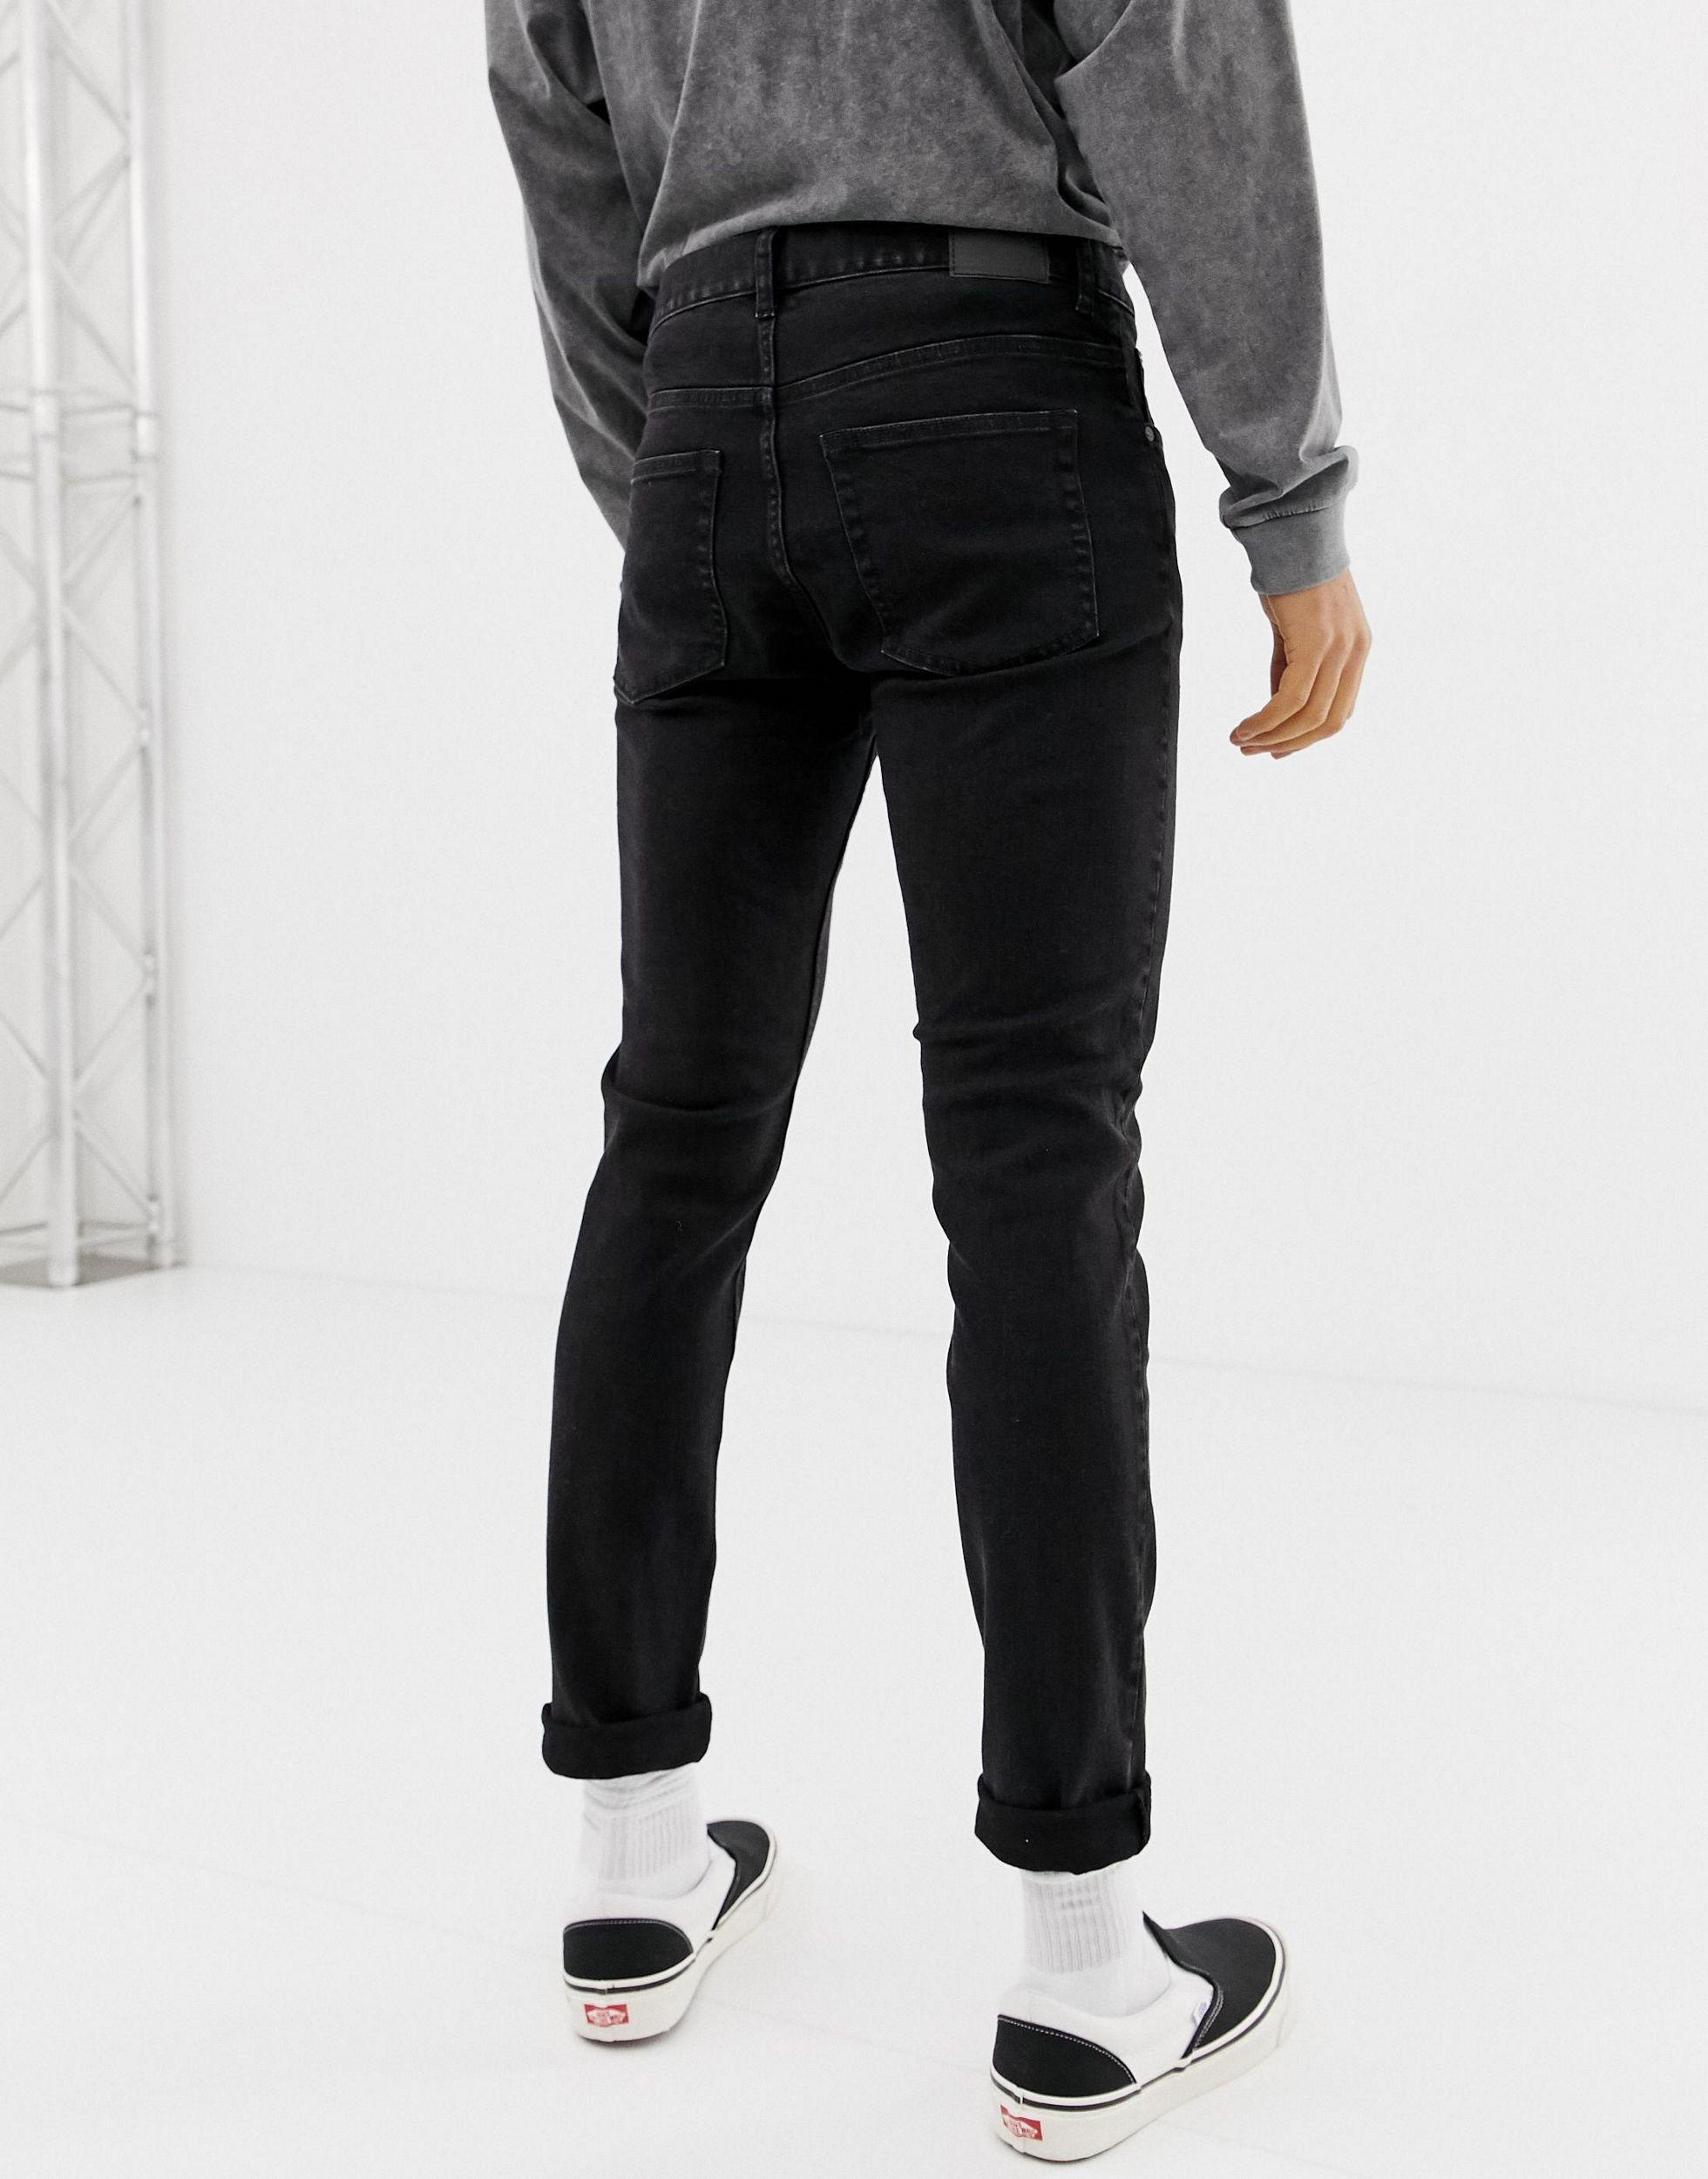 Weekday Denim Friday Slim Jeans Tuned in Black for Men - Lyst